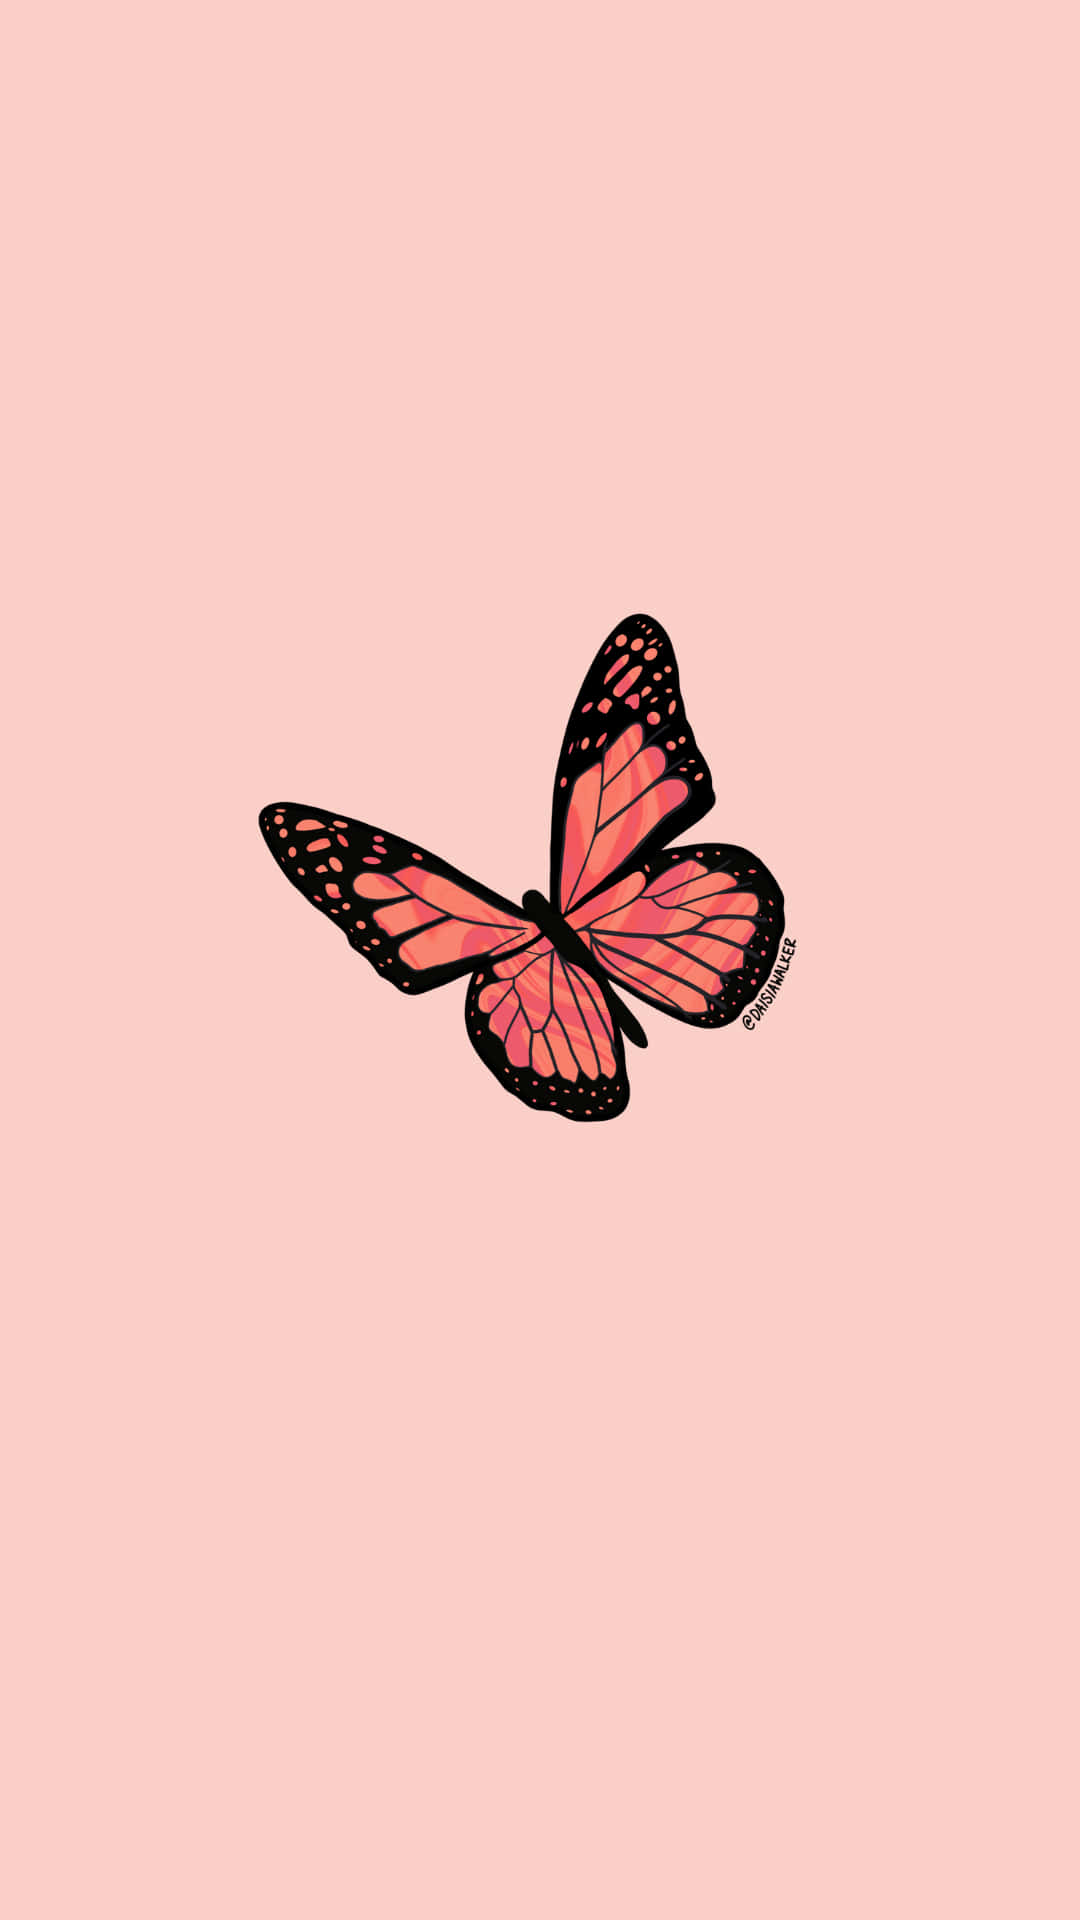 Butterfly Profilbilder 1080 X 1920